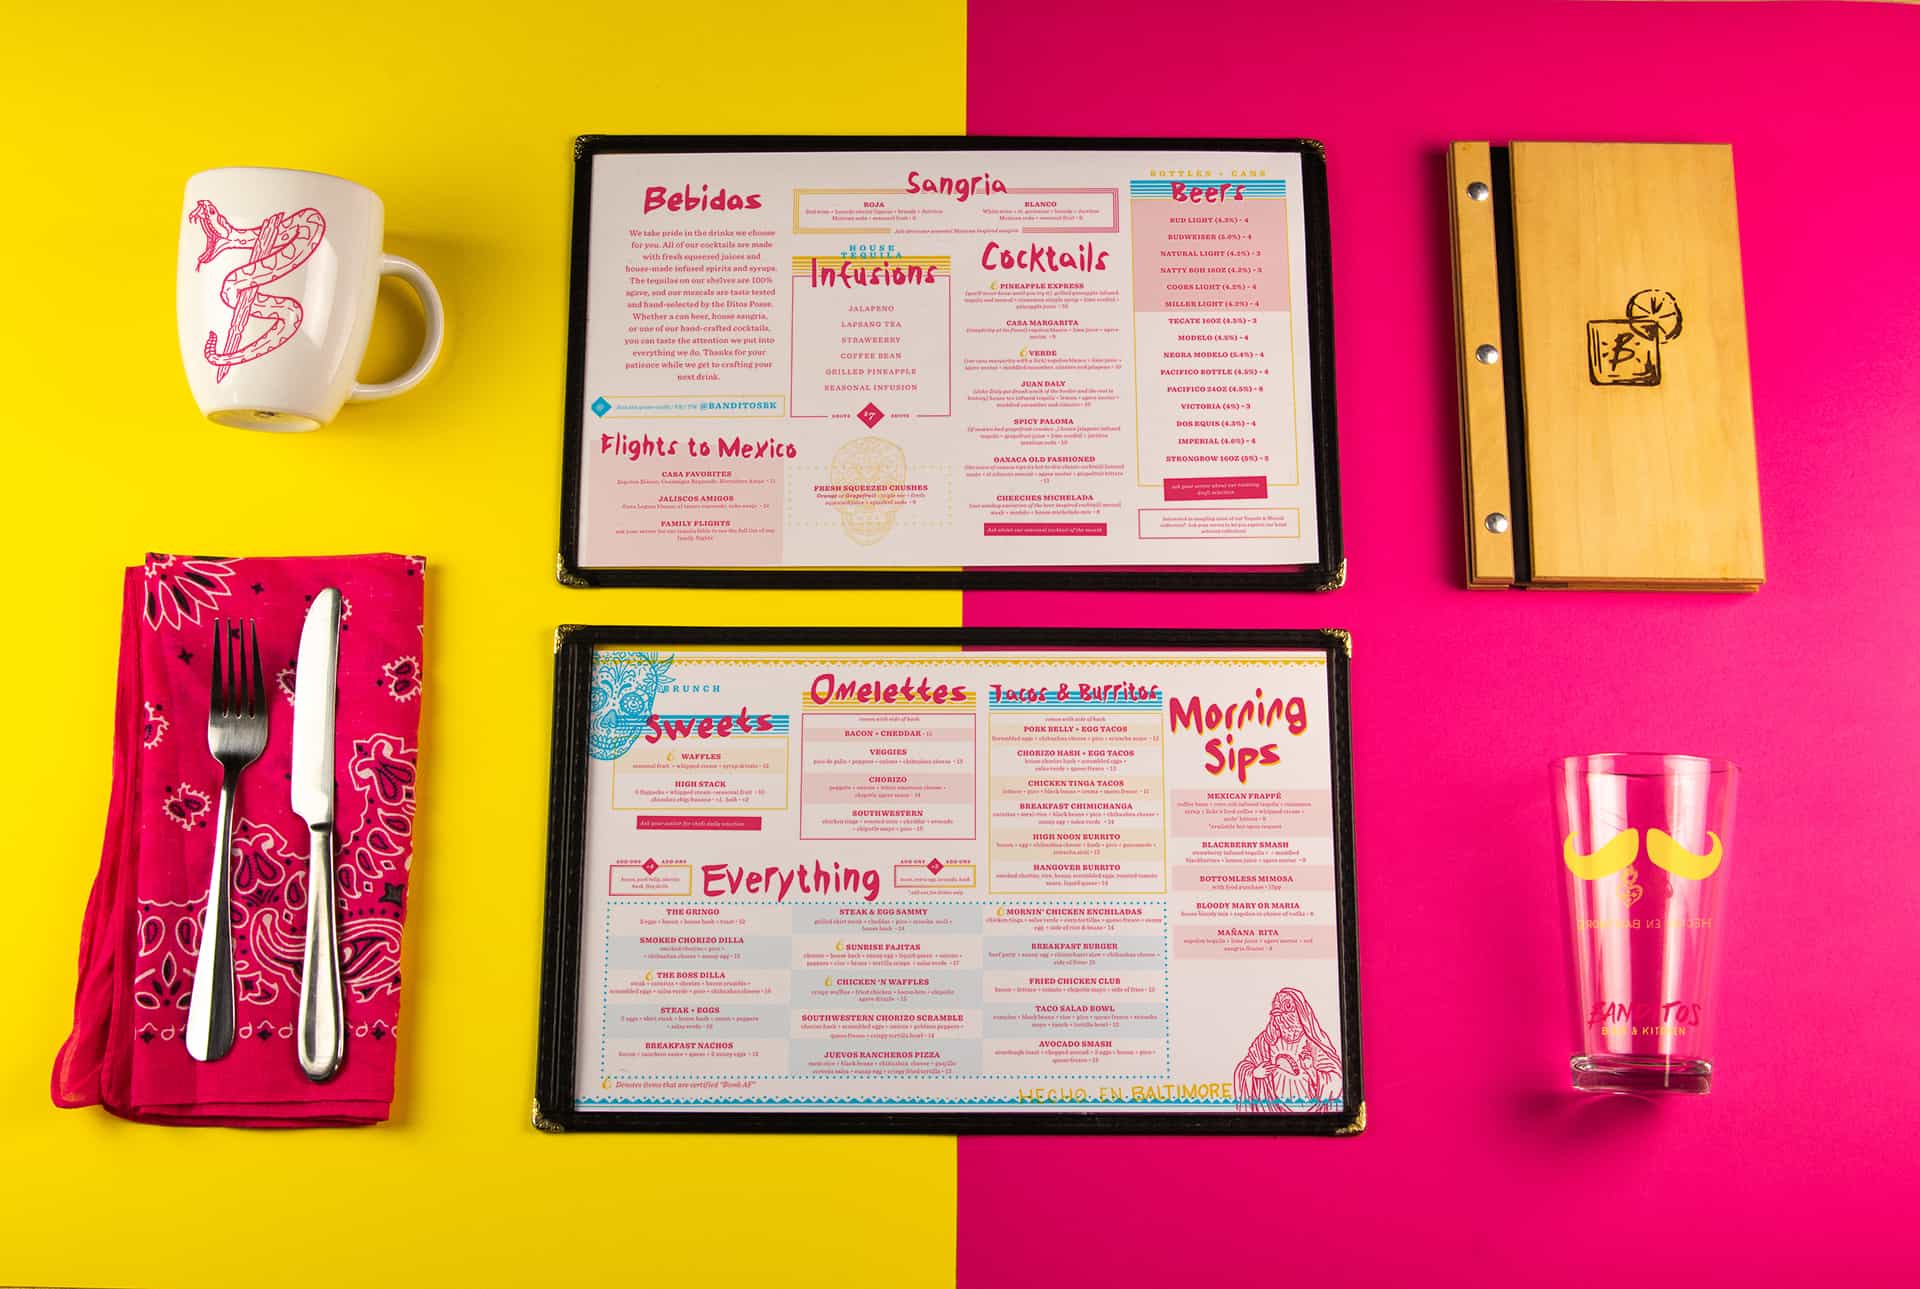 Banditos bar and kitchen rebranding and design by Vigor menu design suite